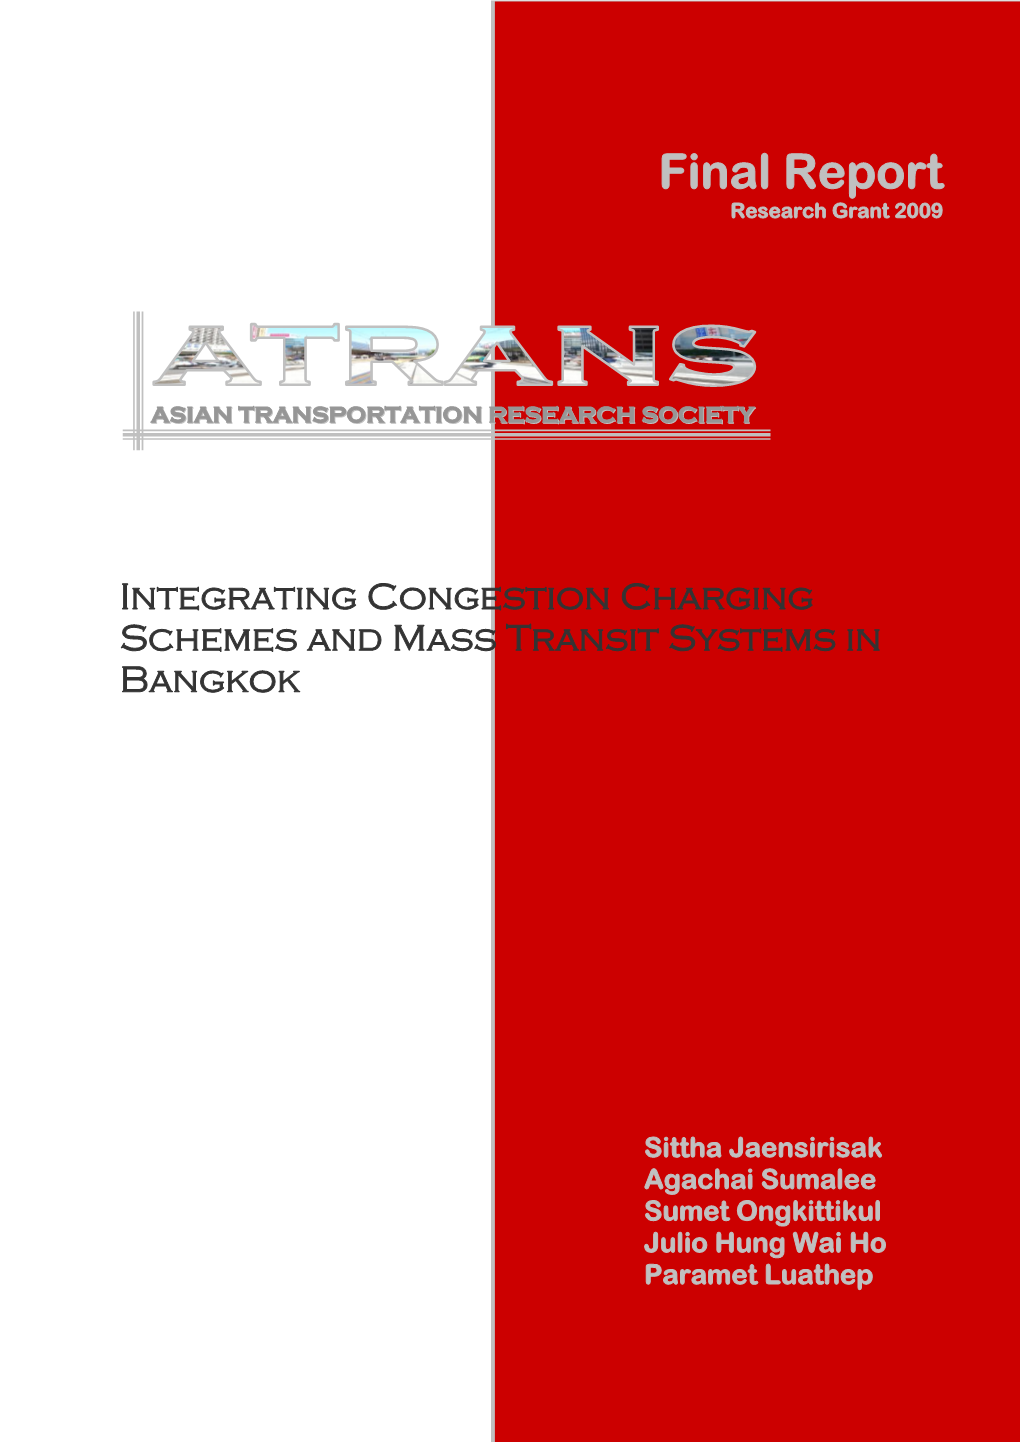 Final Report Research Grant 2009